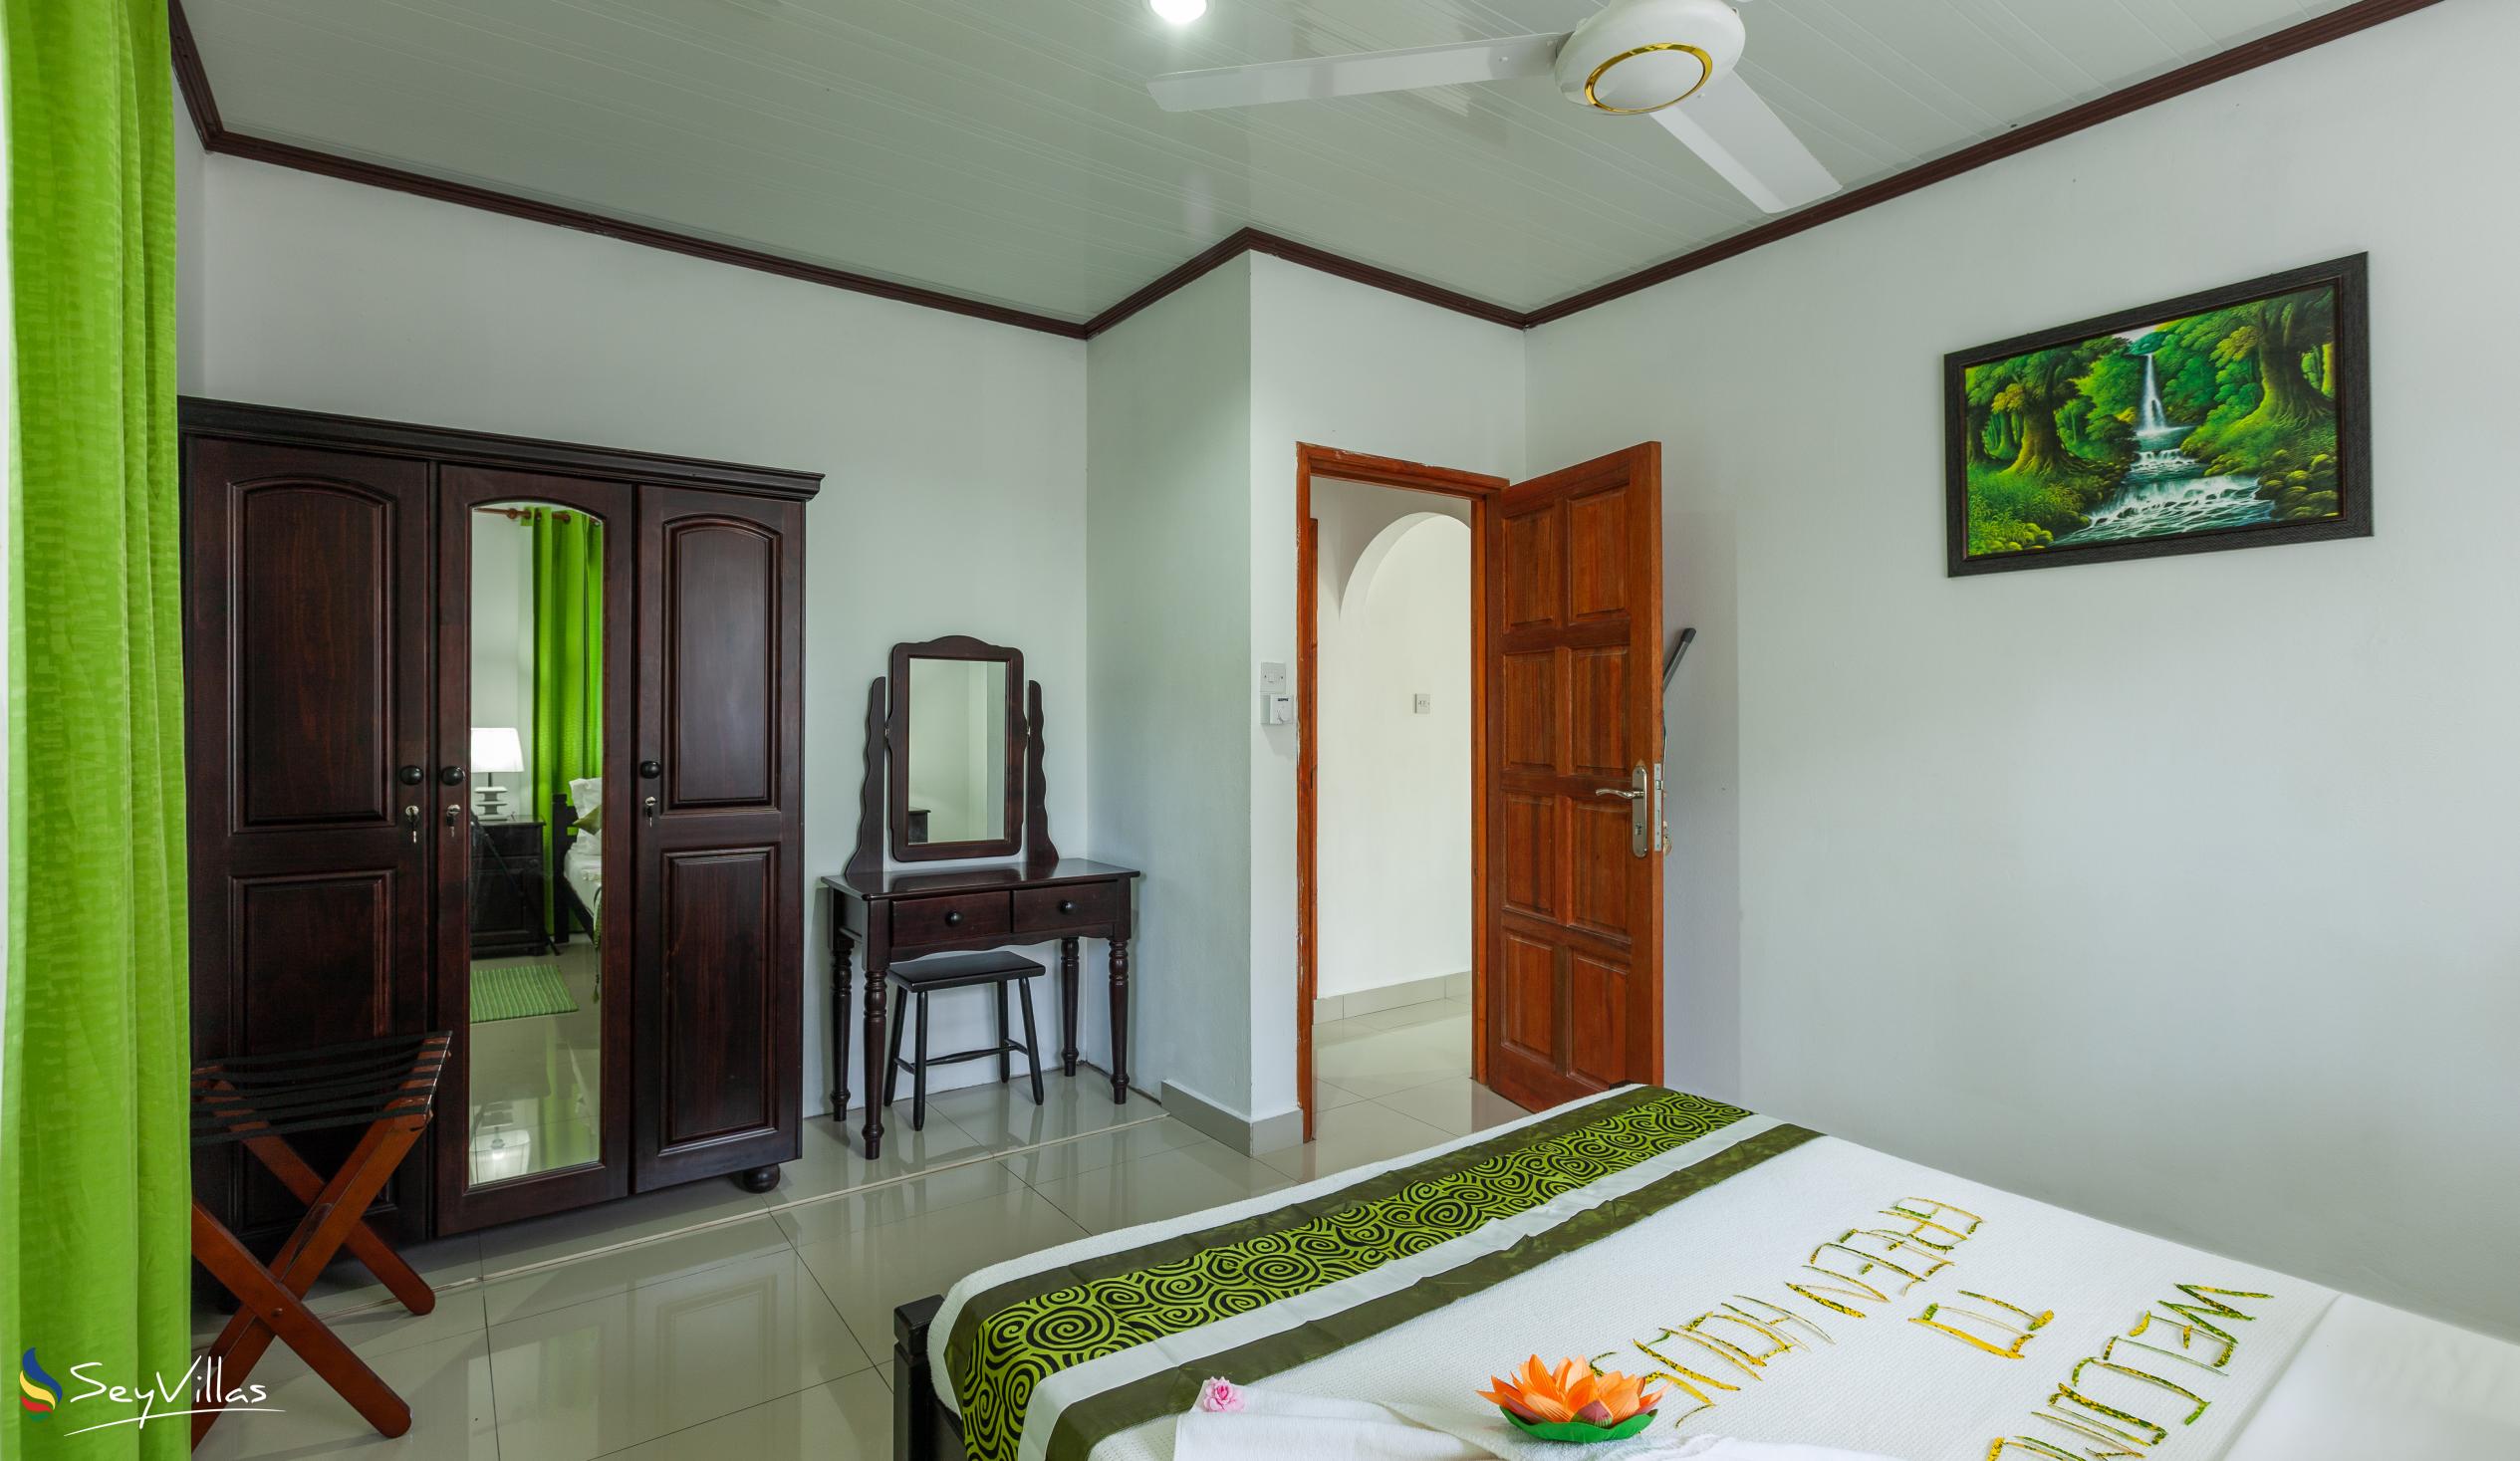 Photo 57: Belle Vacance Self Catering - 1-Bedroom Apartment - Praslin (Seychelles)